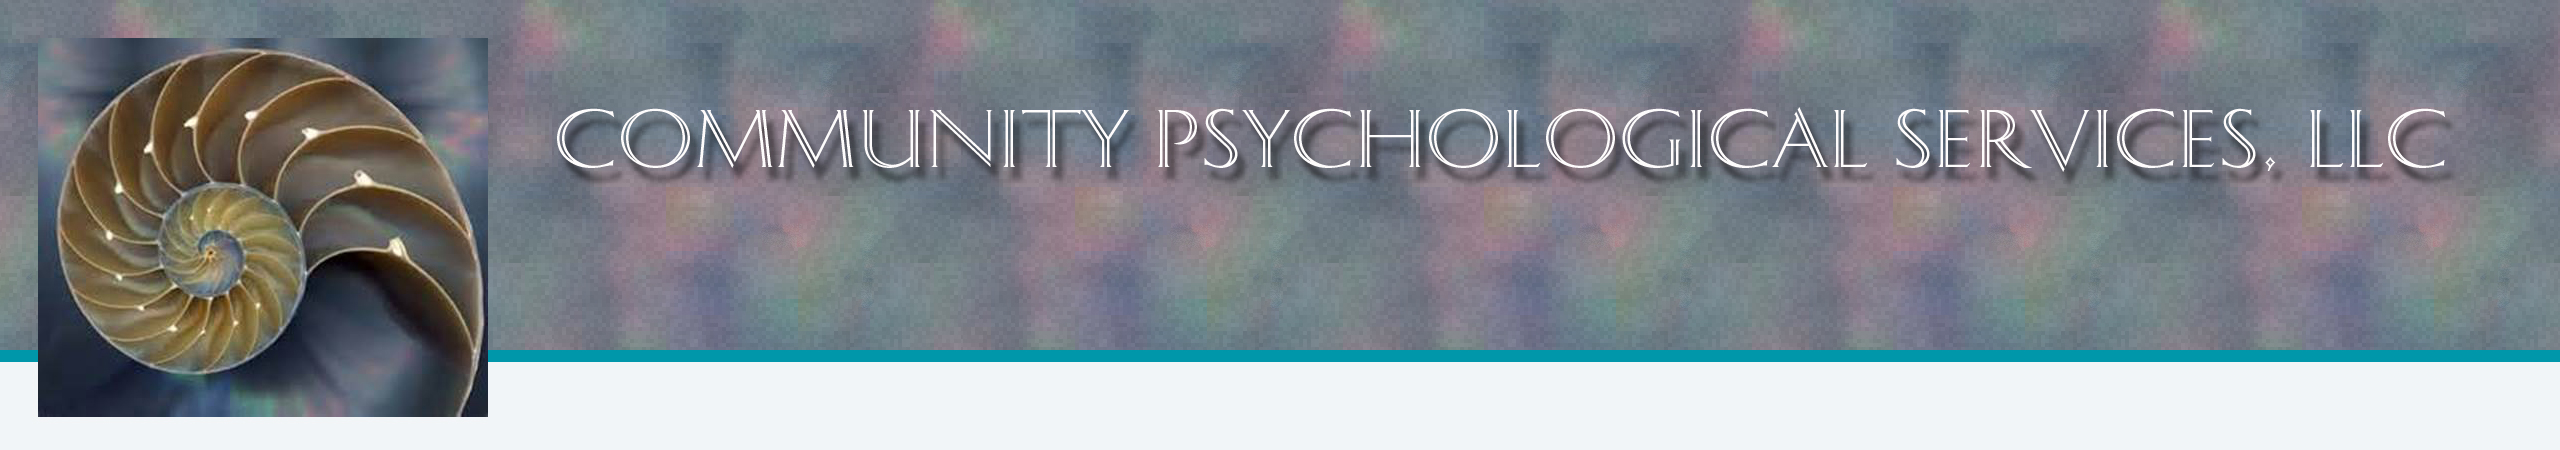 Community Psychological Services, LLC